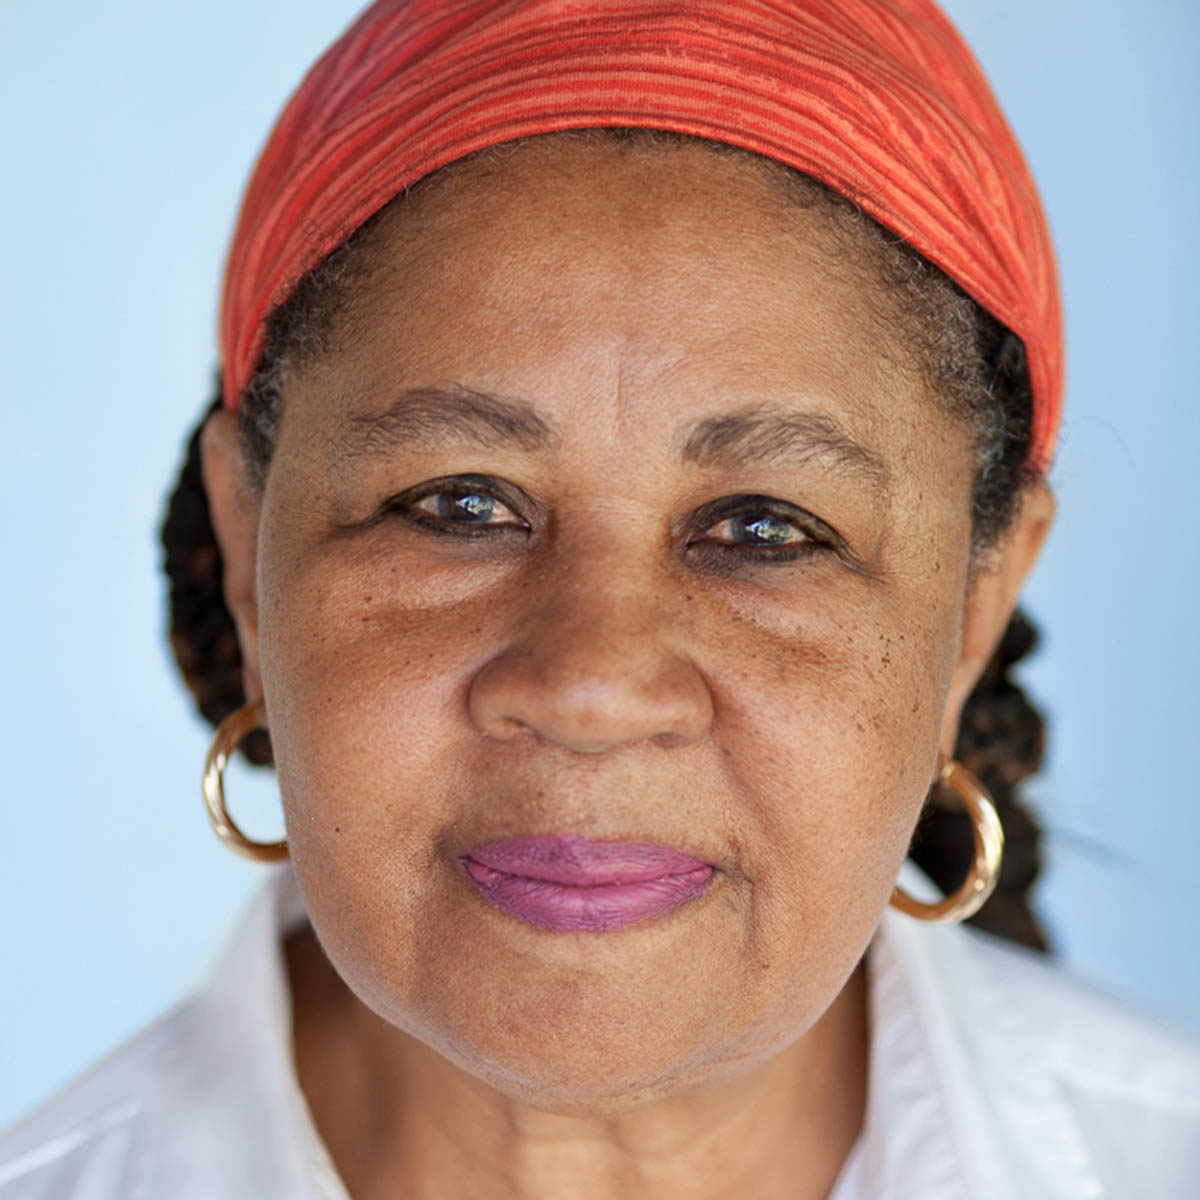 Headshot of Jamaica Kincaid, who wears hoop earrings and an orange head wrap.